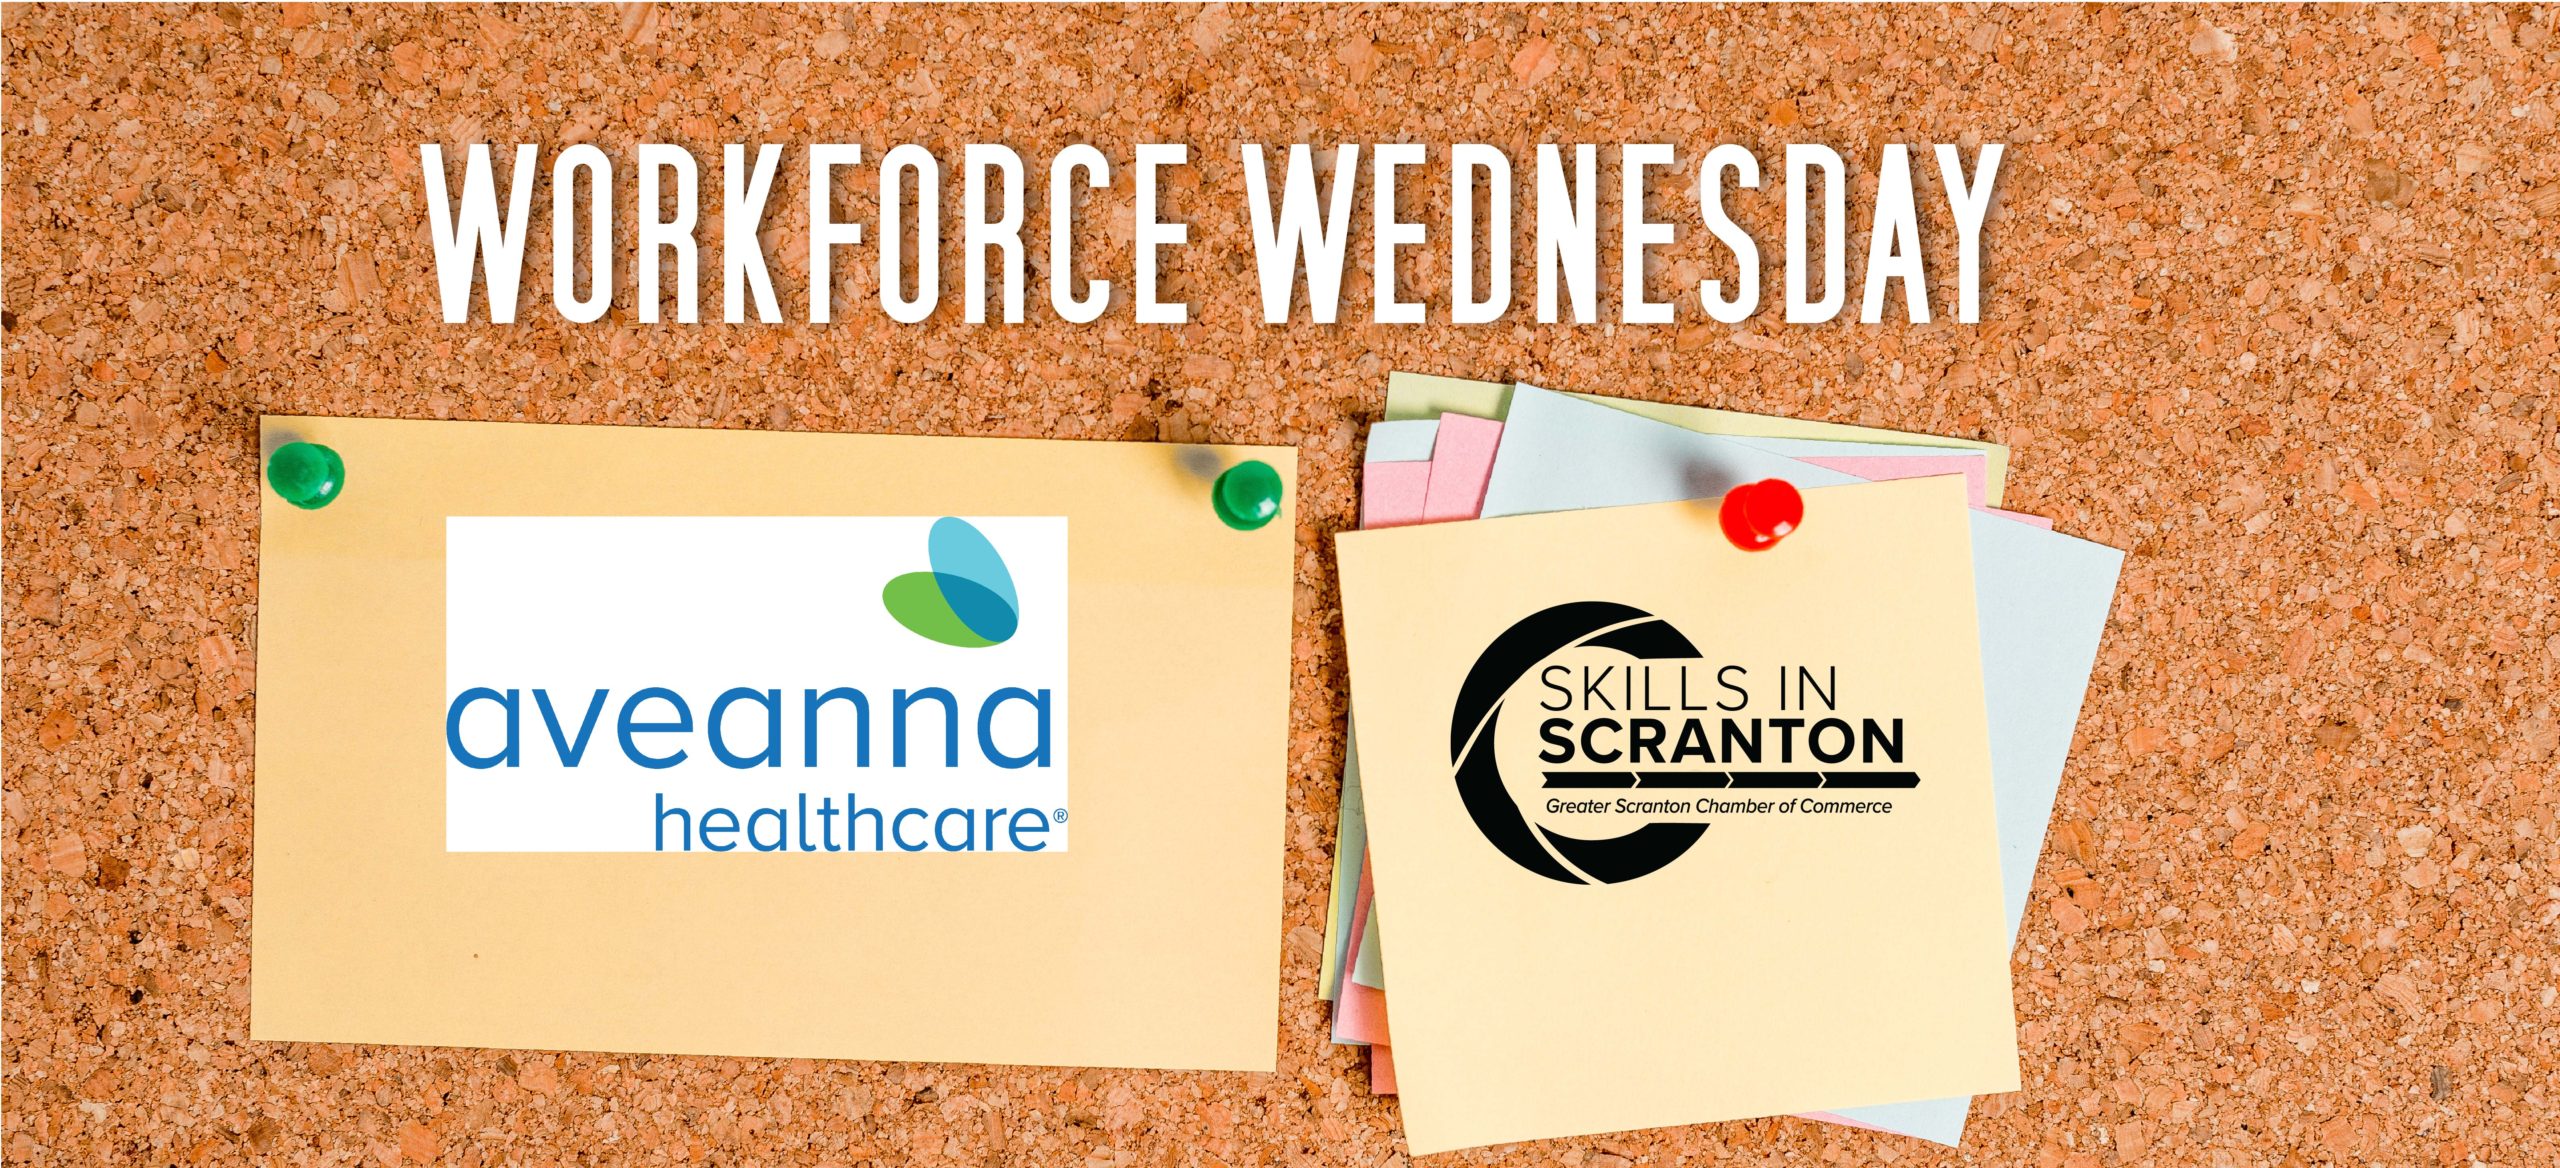 Workforce Wednesday: Aveanna Healthcare